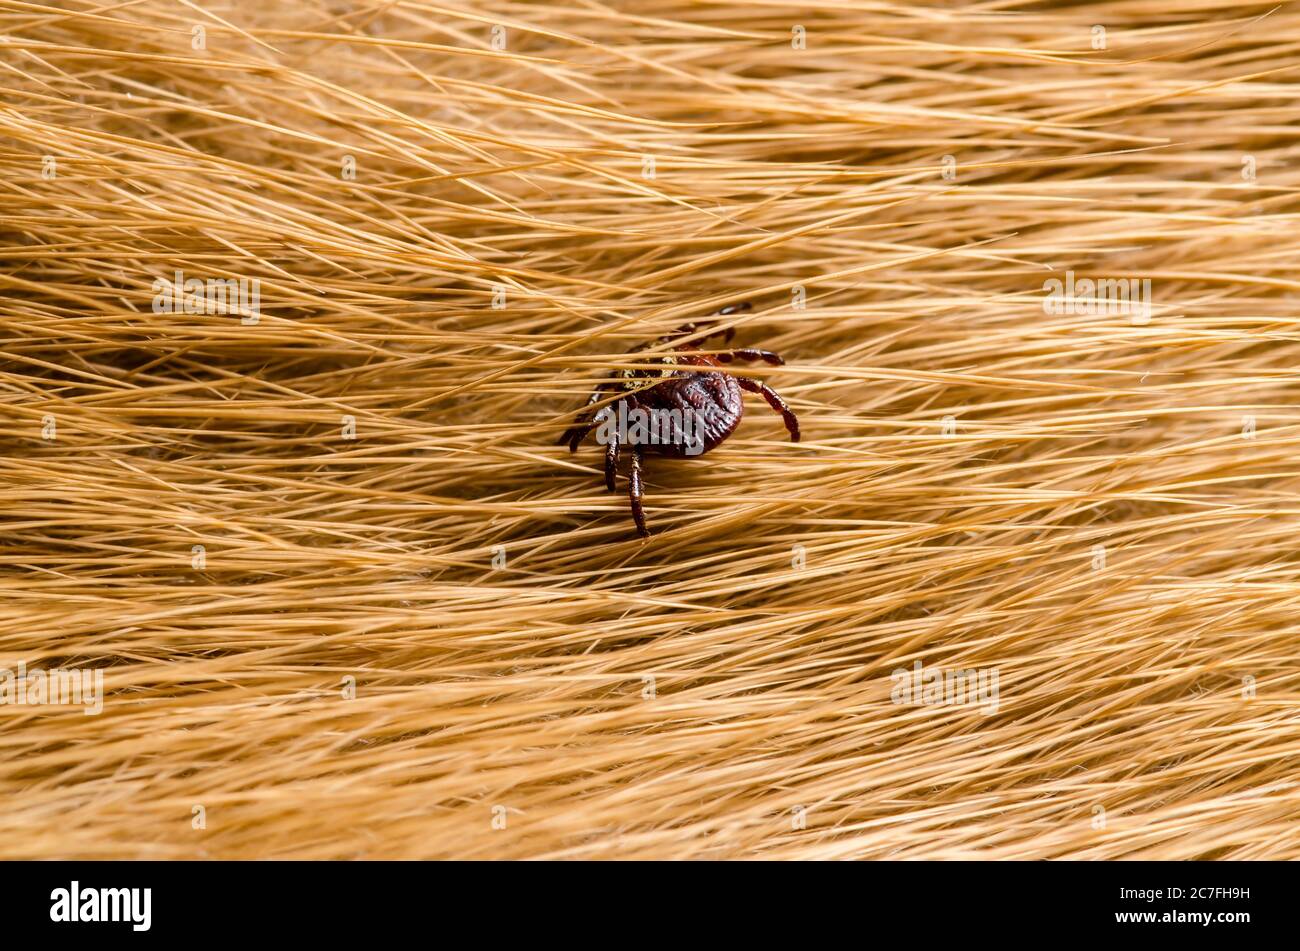 Encephalitis Virus or Lyme Borreliosis Disease Infectious Dermacentor Tick Arachnid Parasite Insect on Animal Fur Stock Photo